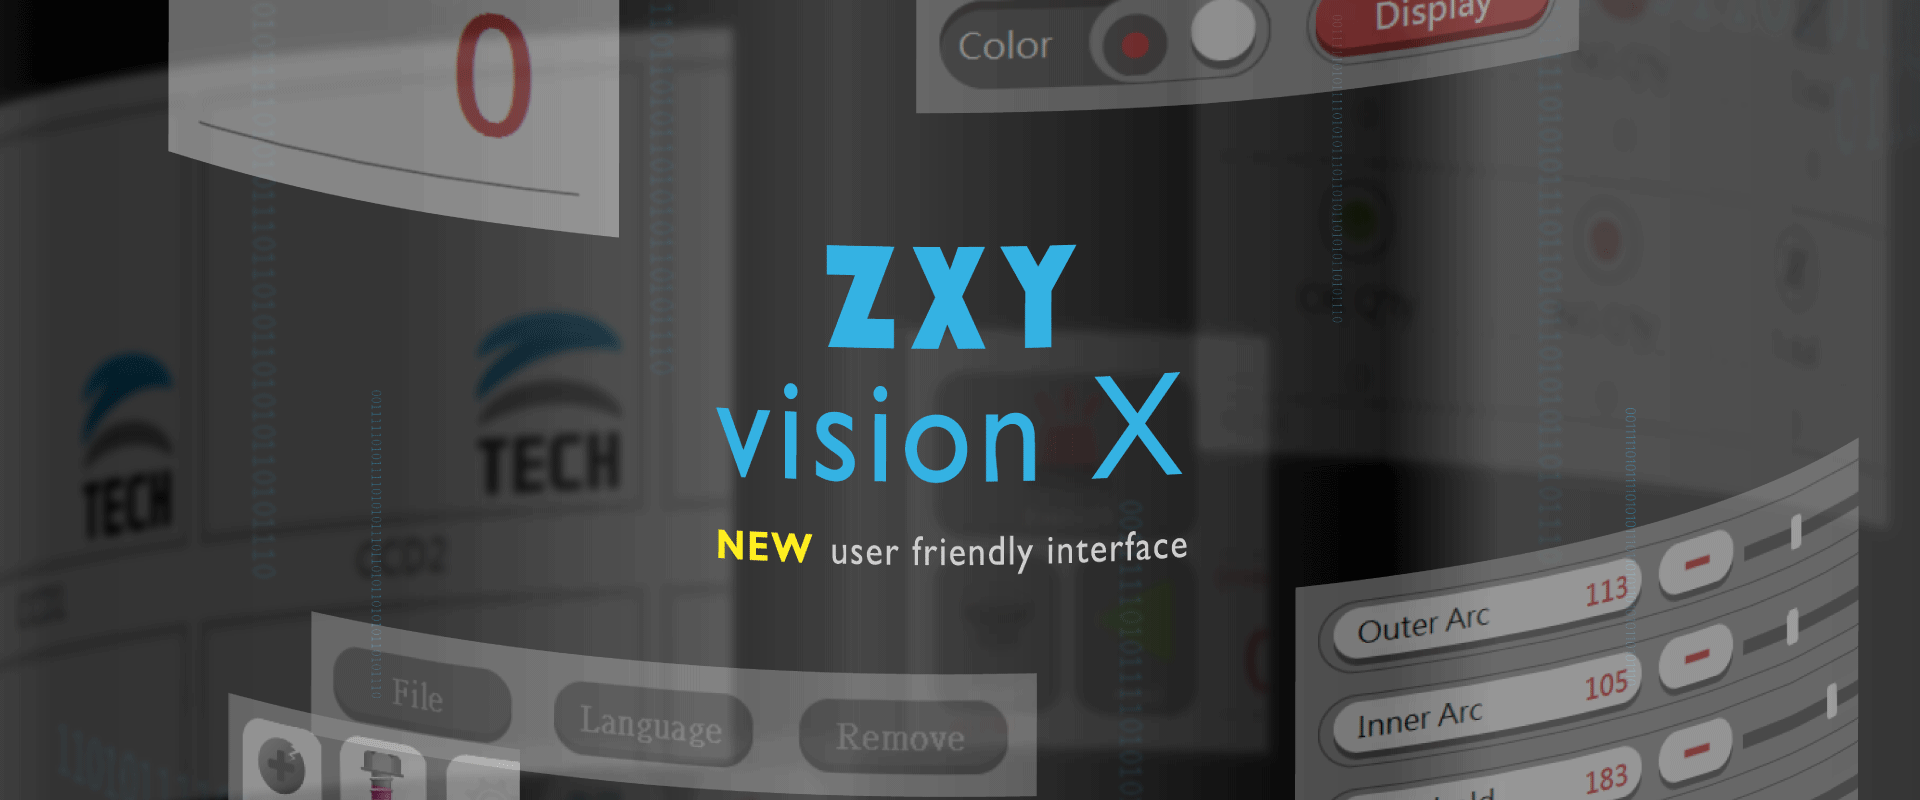 ZXY 擇興源 新版軟體上市 Vision X